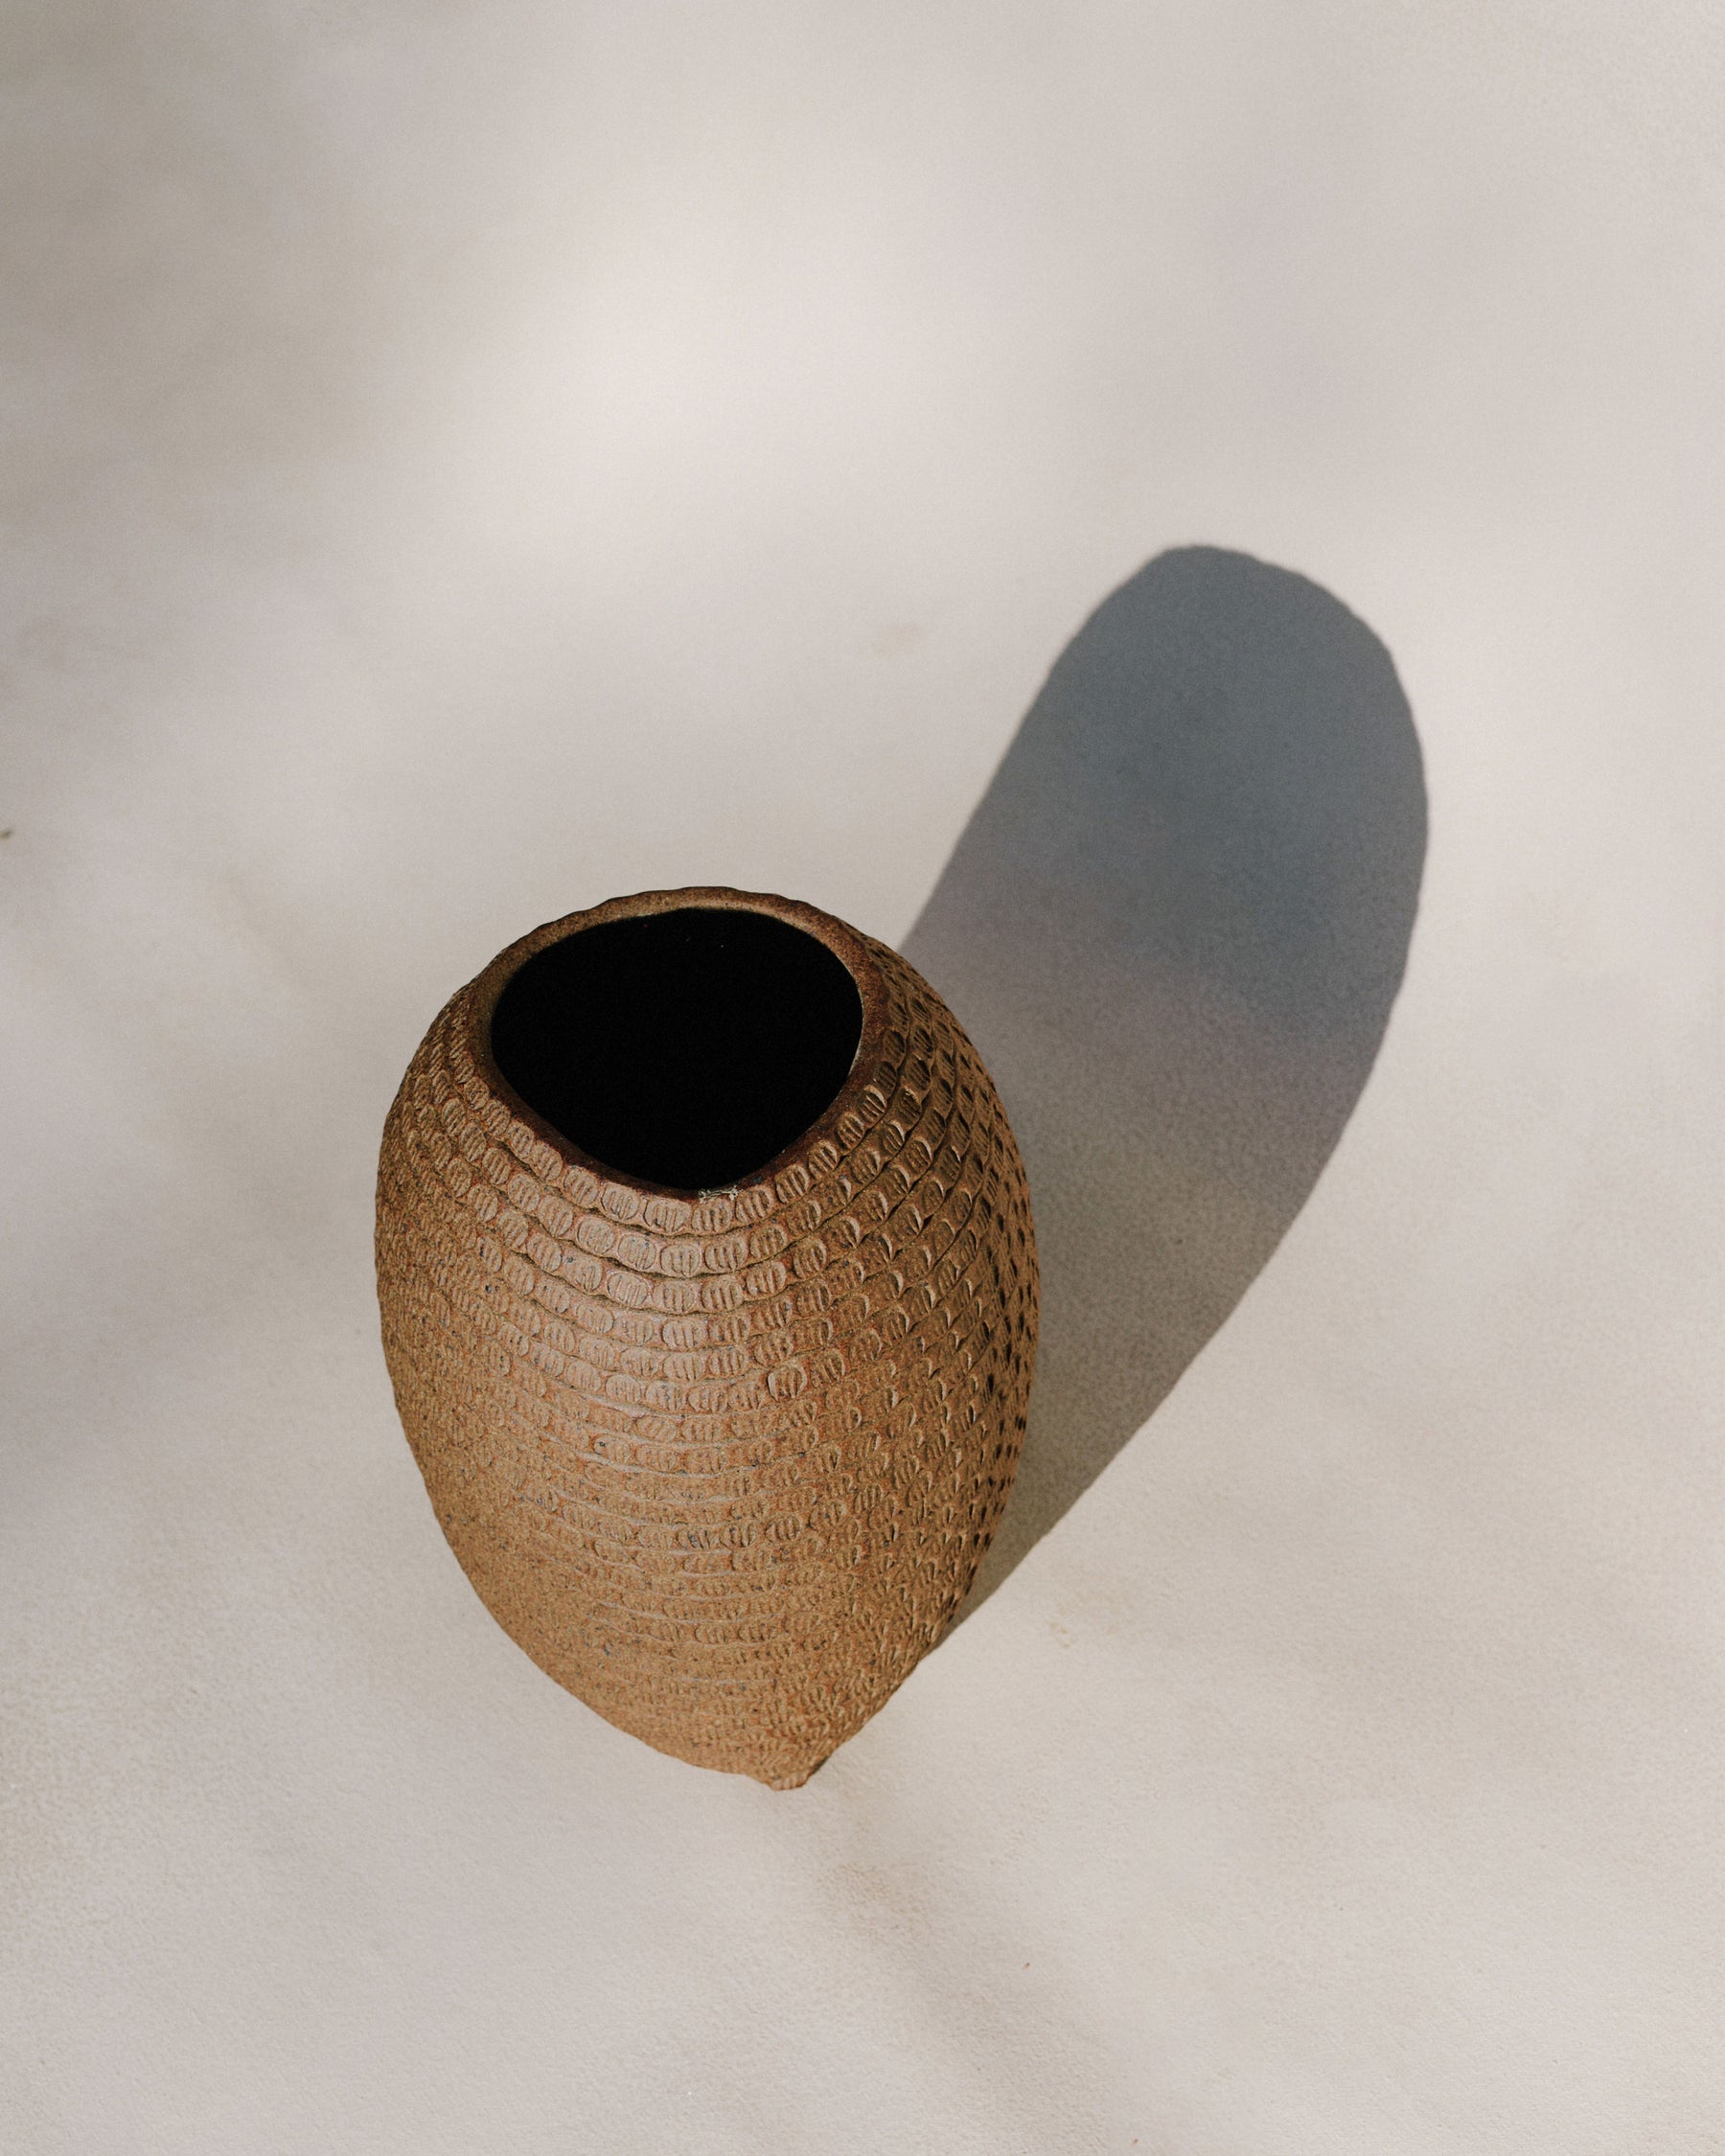 Unglazed Coil Vase I by Katherine Moes